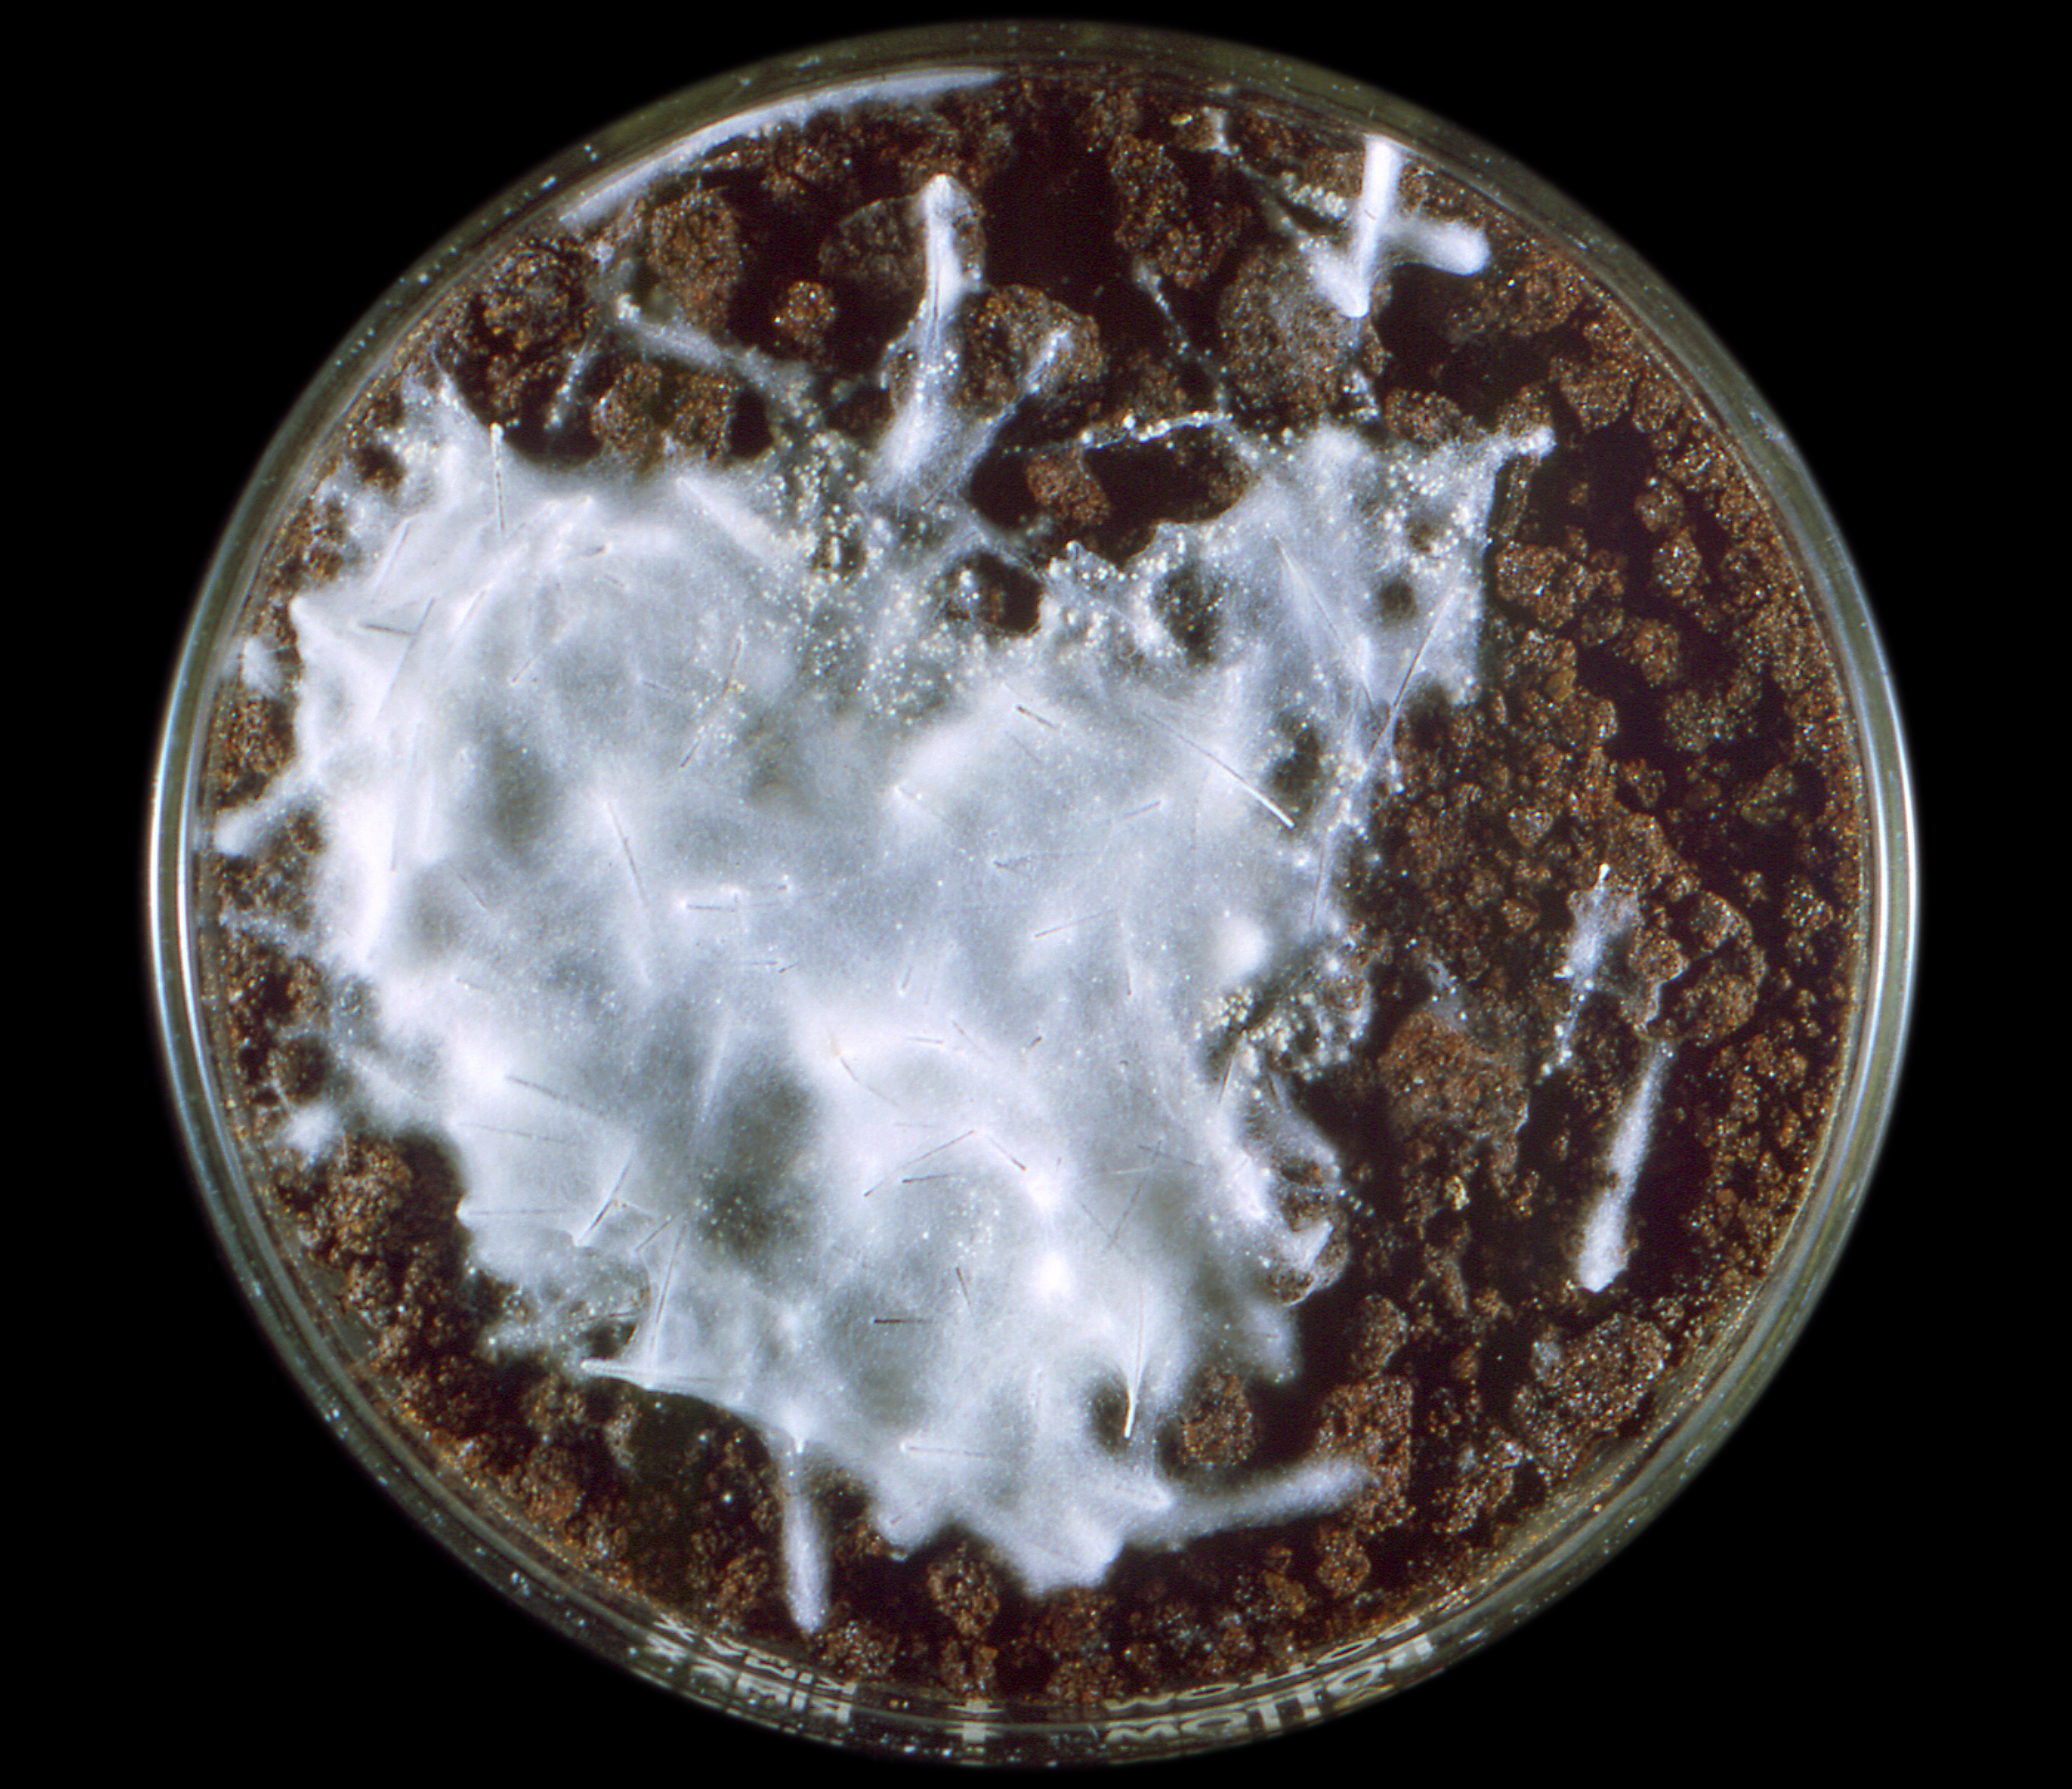 Trichophyton mentagrophytes in petri dish